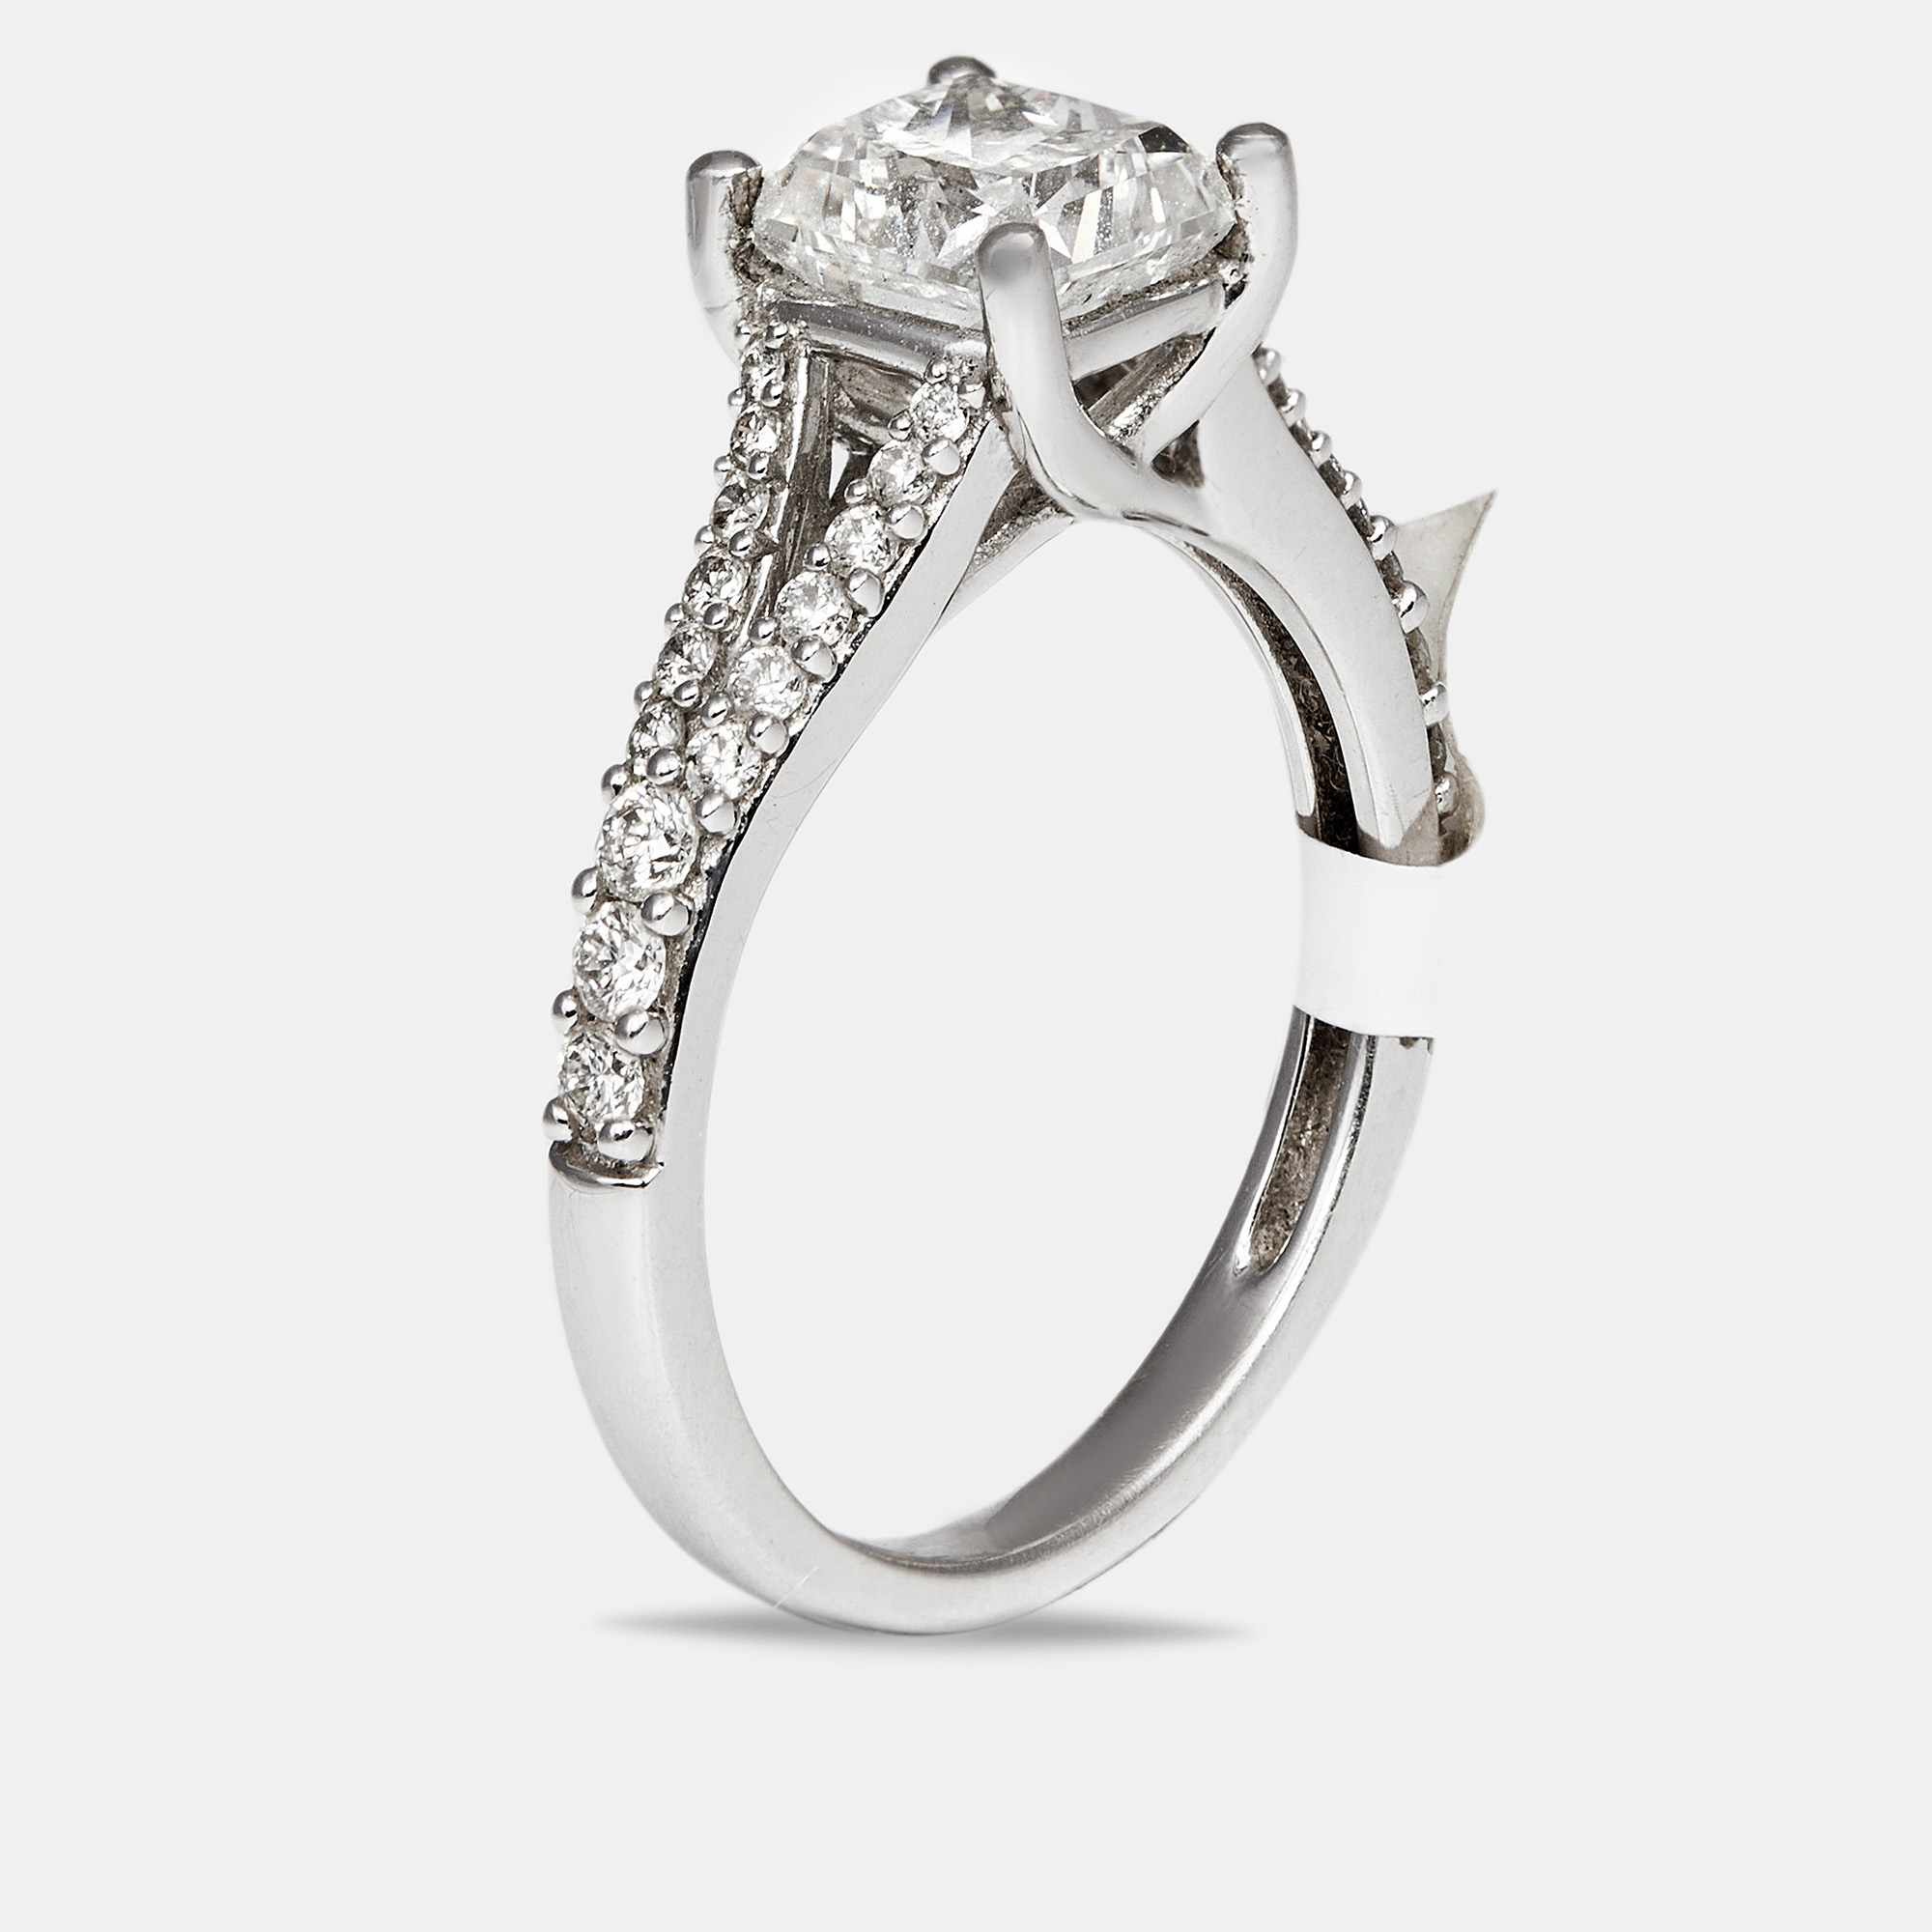 The diamond edit classic princess and round diamond 1.84 ct 18k white gold engagement ring size 51